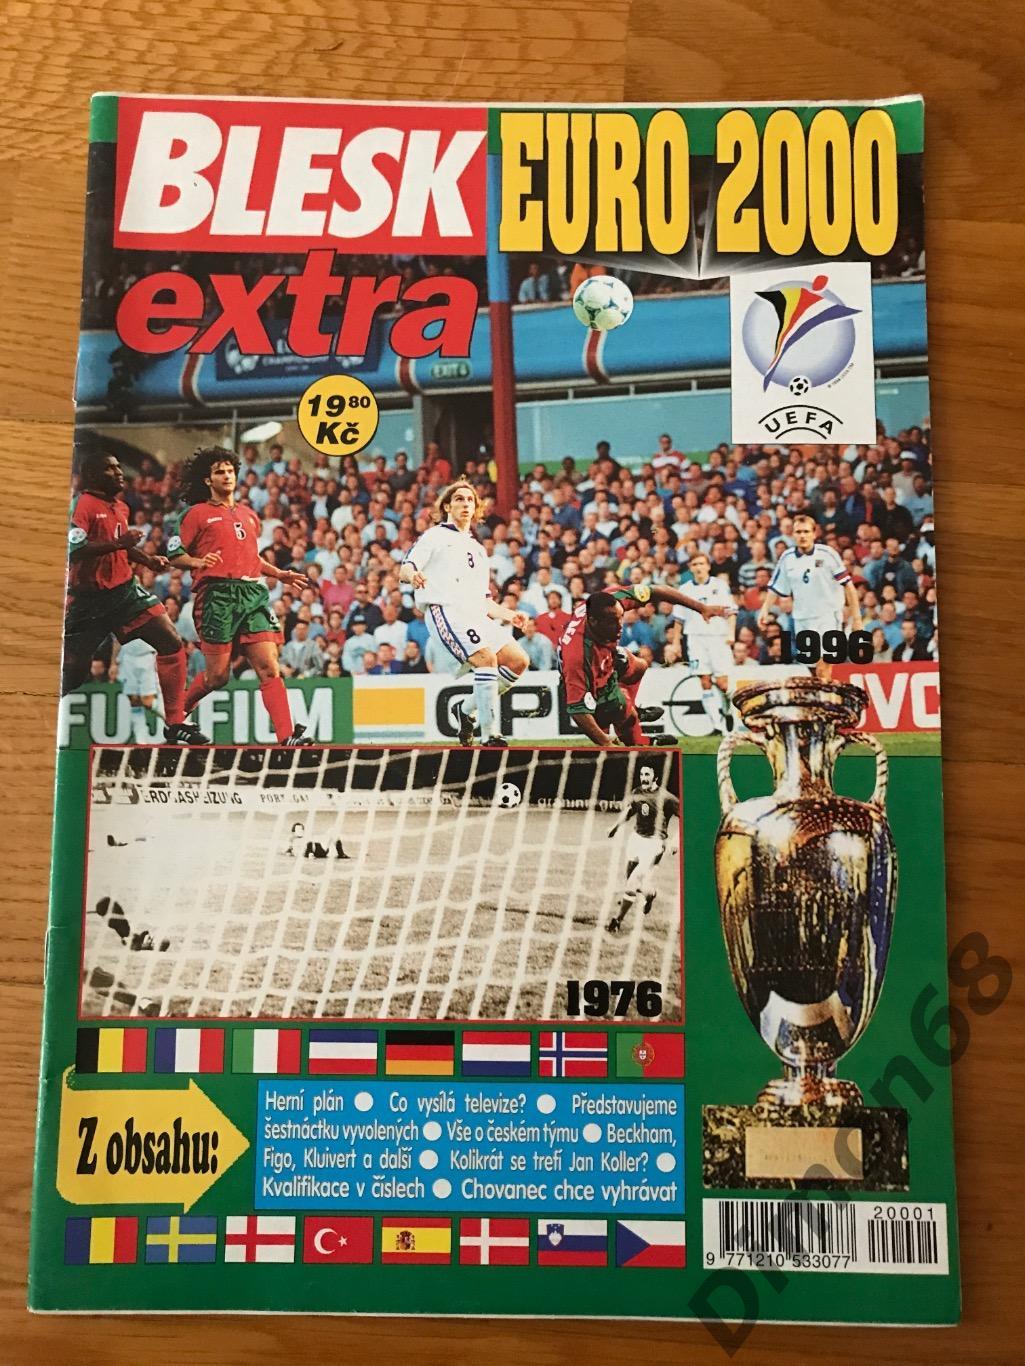 Blesk extra euro 2000